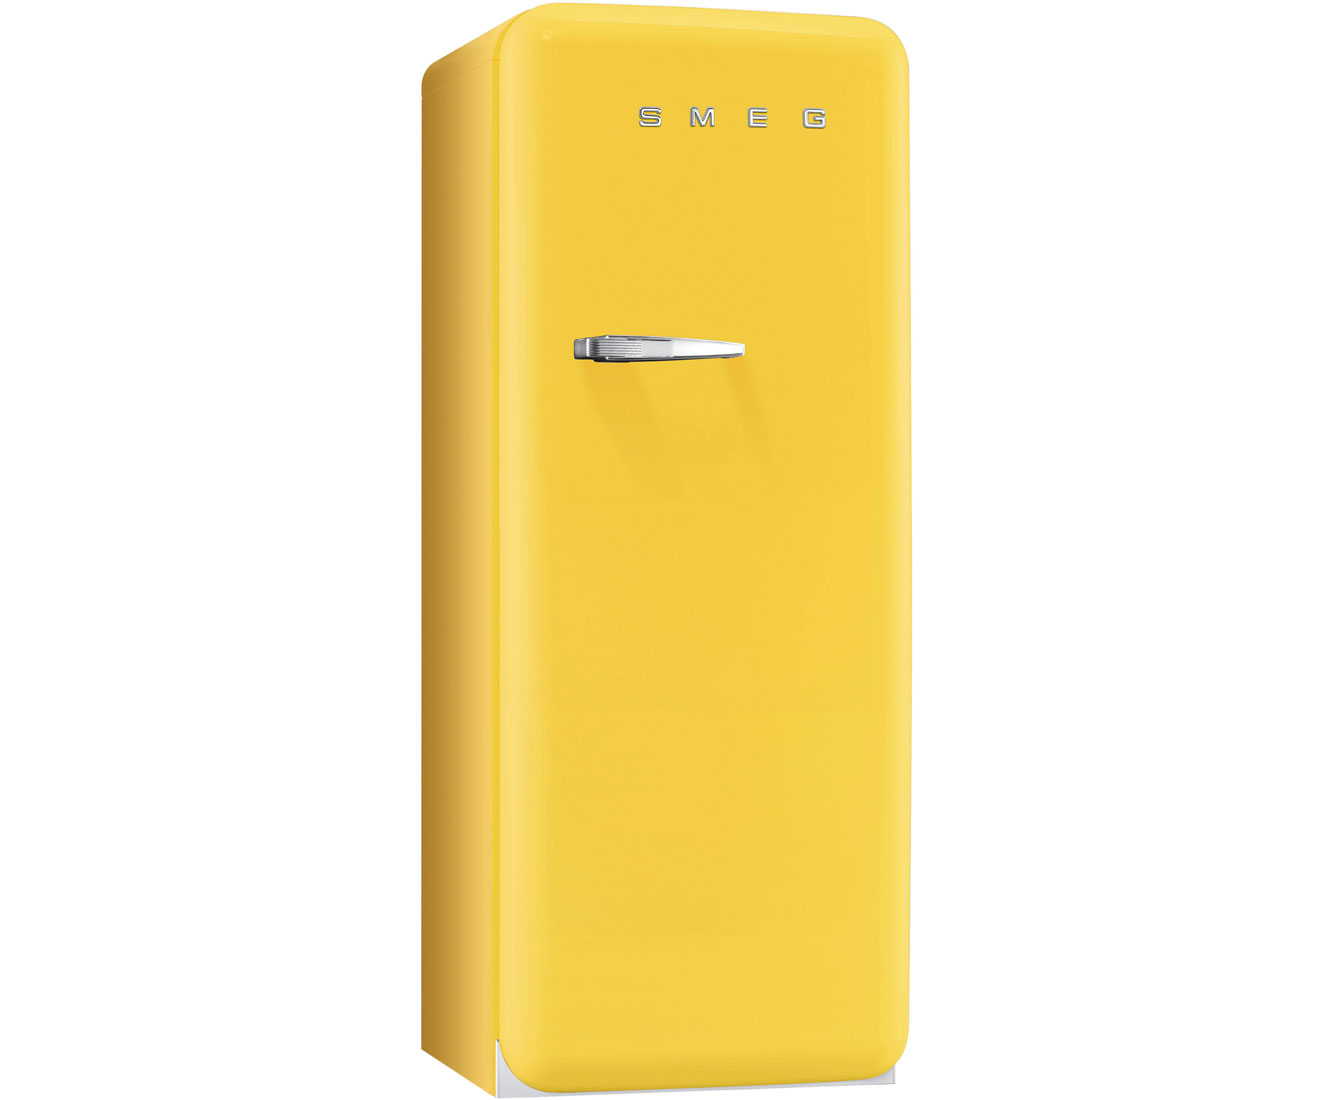 Smeg Right Hand Hinge FAB28QG1 Free Standing Refrigerator in Yellow